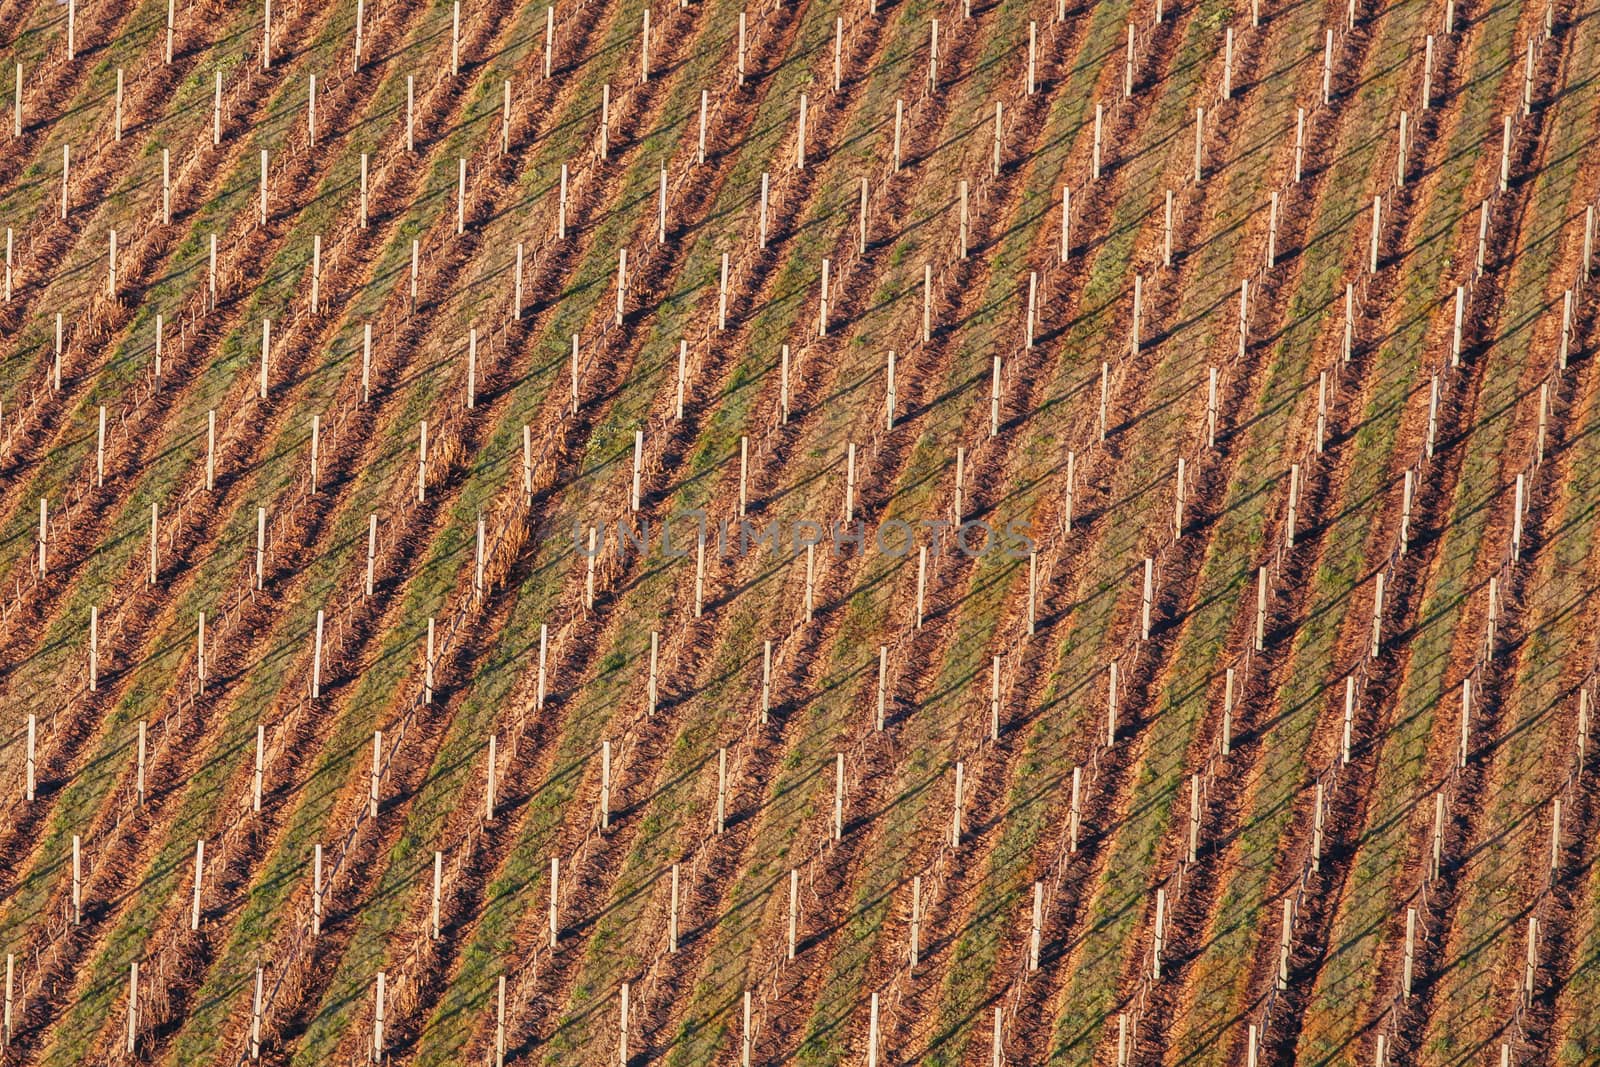 Aerial View of a Vineyard in Australia by FiledIMAGE